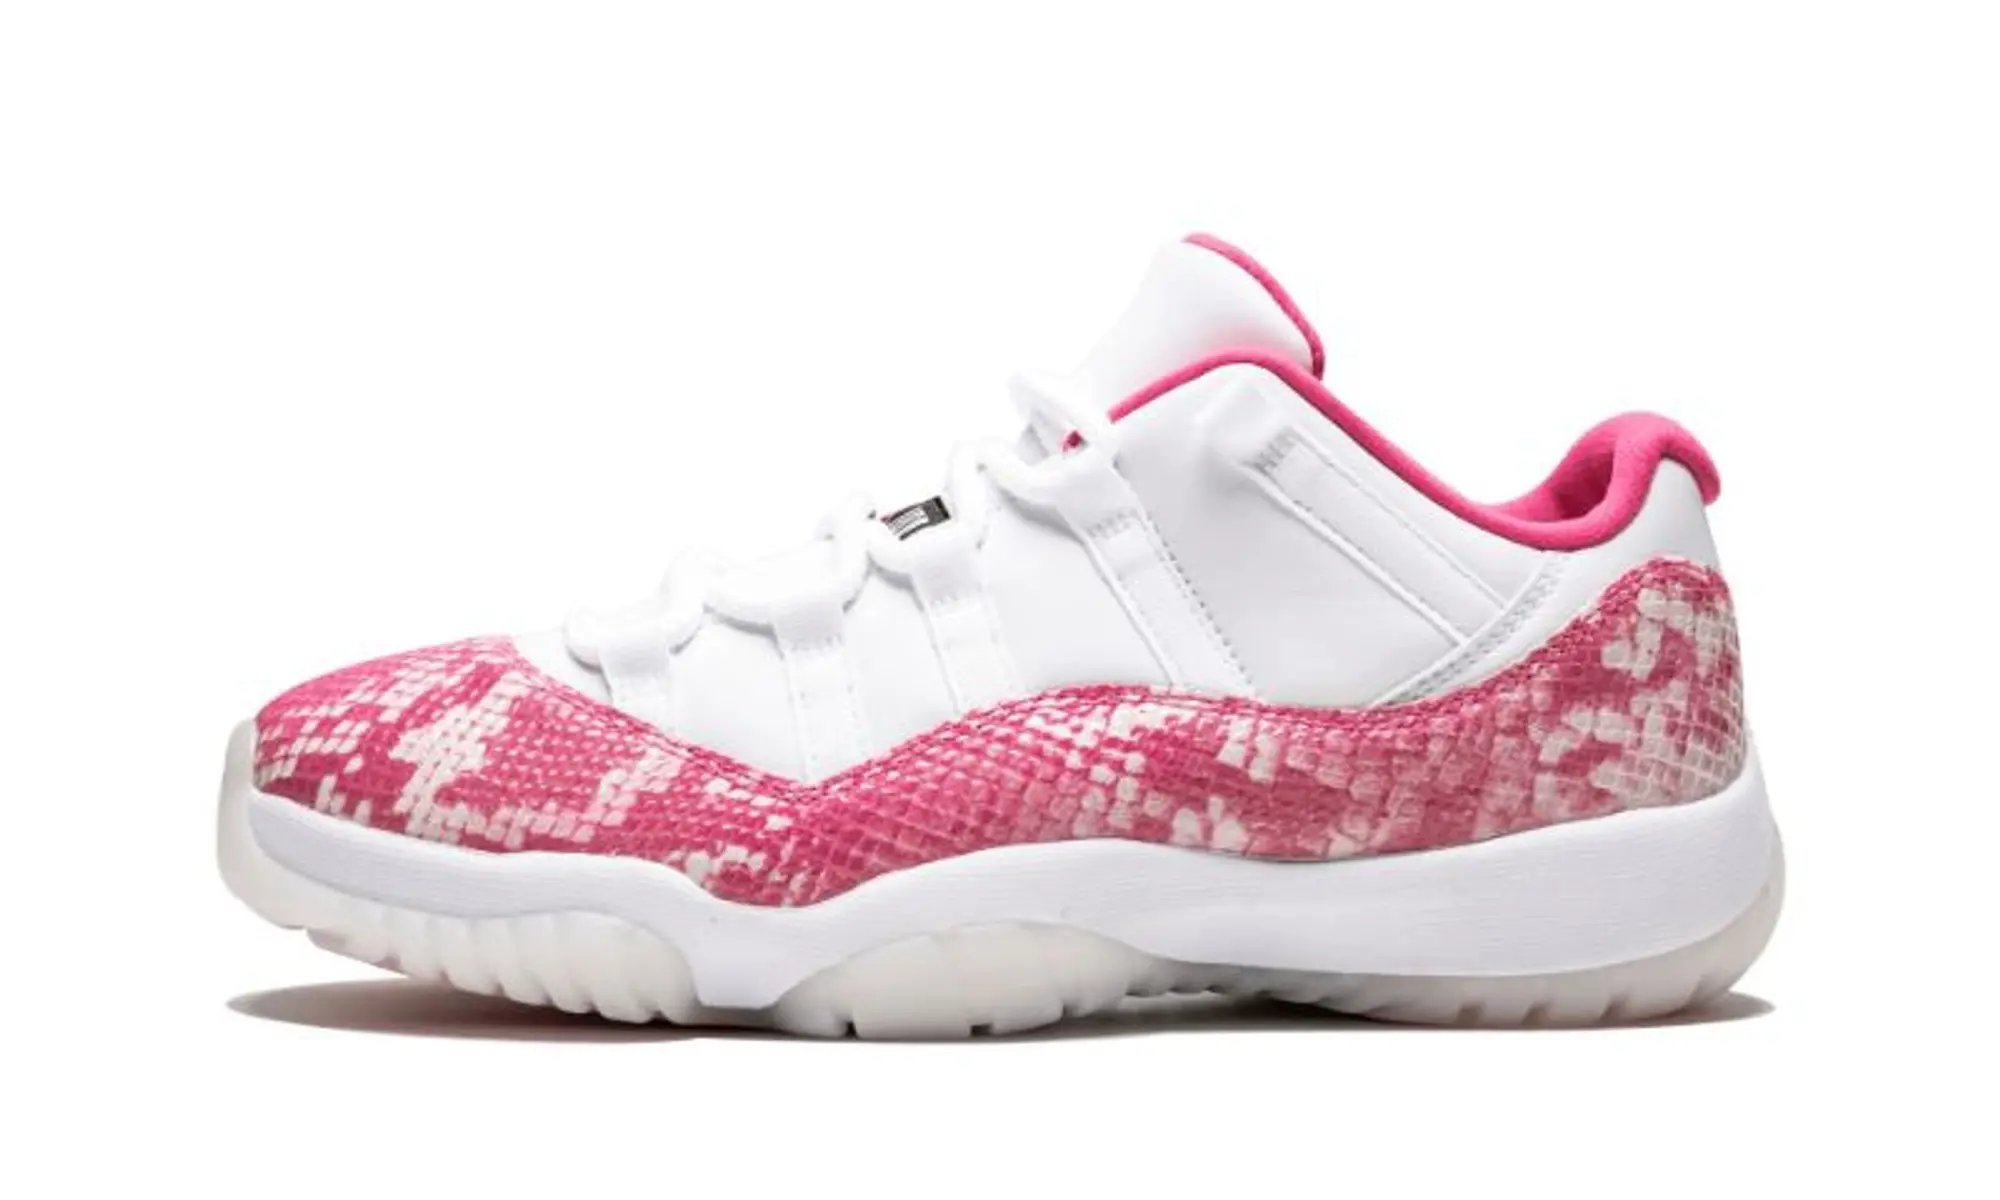 Nike Womens Air Jordan 11 Retro Low Pink Snakeskin Shoes